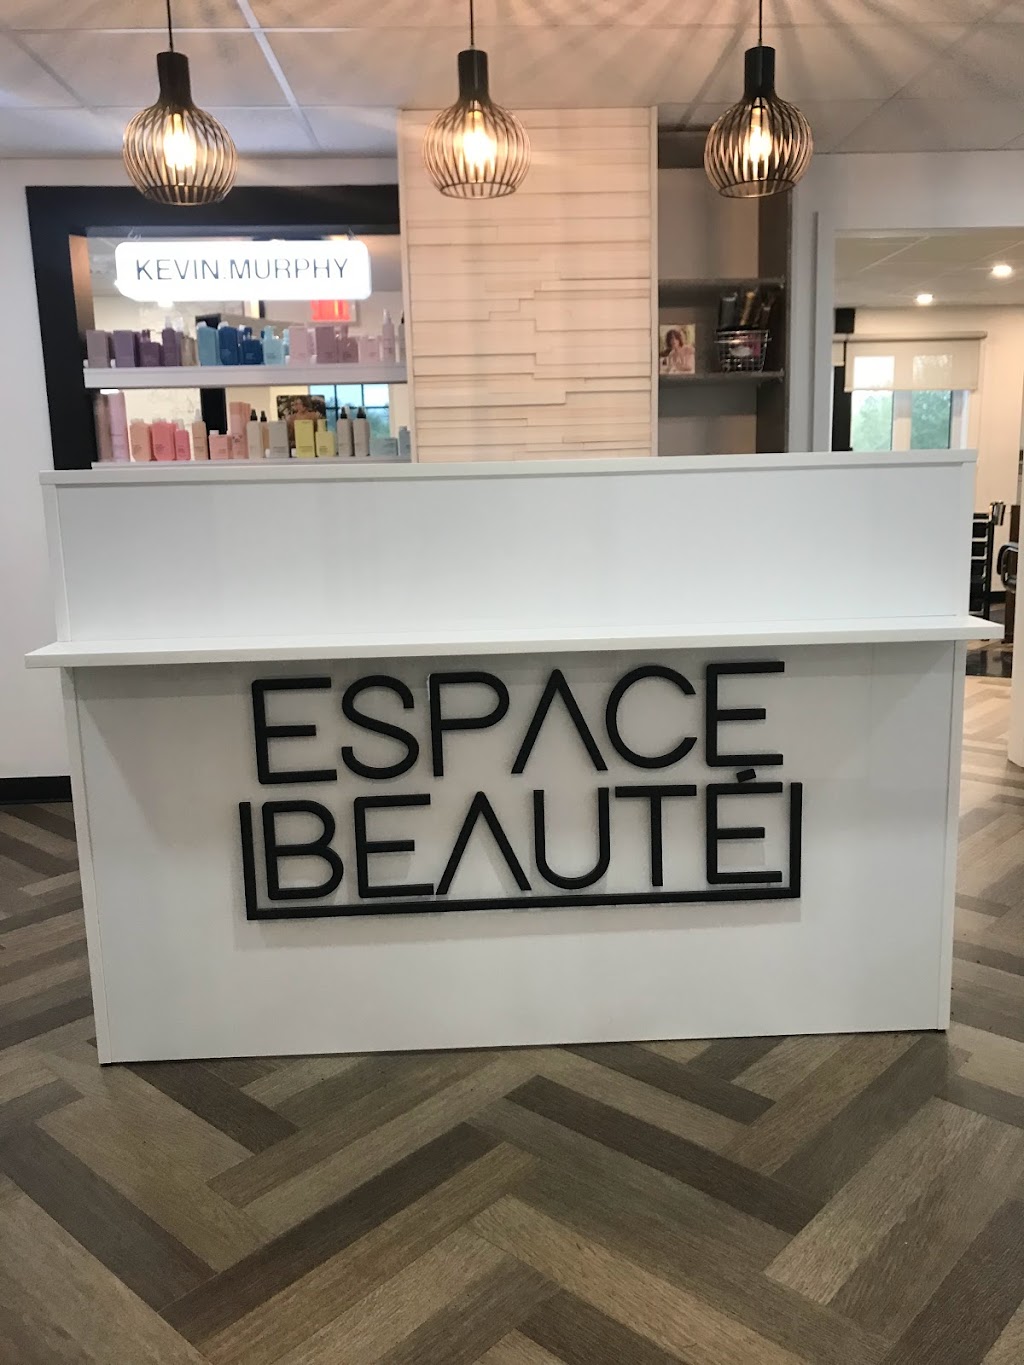 Espace Beaute | 10500 1ᴱ Avenue, Saint-Georges, QC G5Y 2C1, Canada | Phone: (418) 226-0922